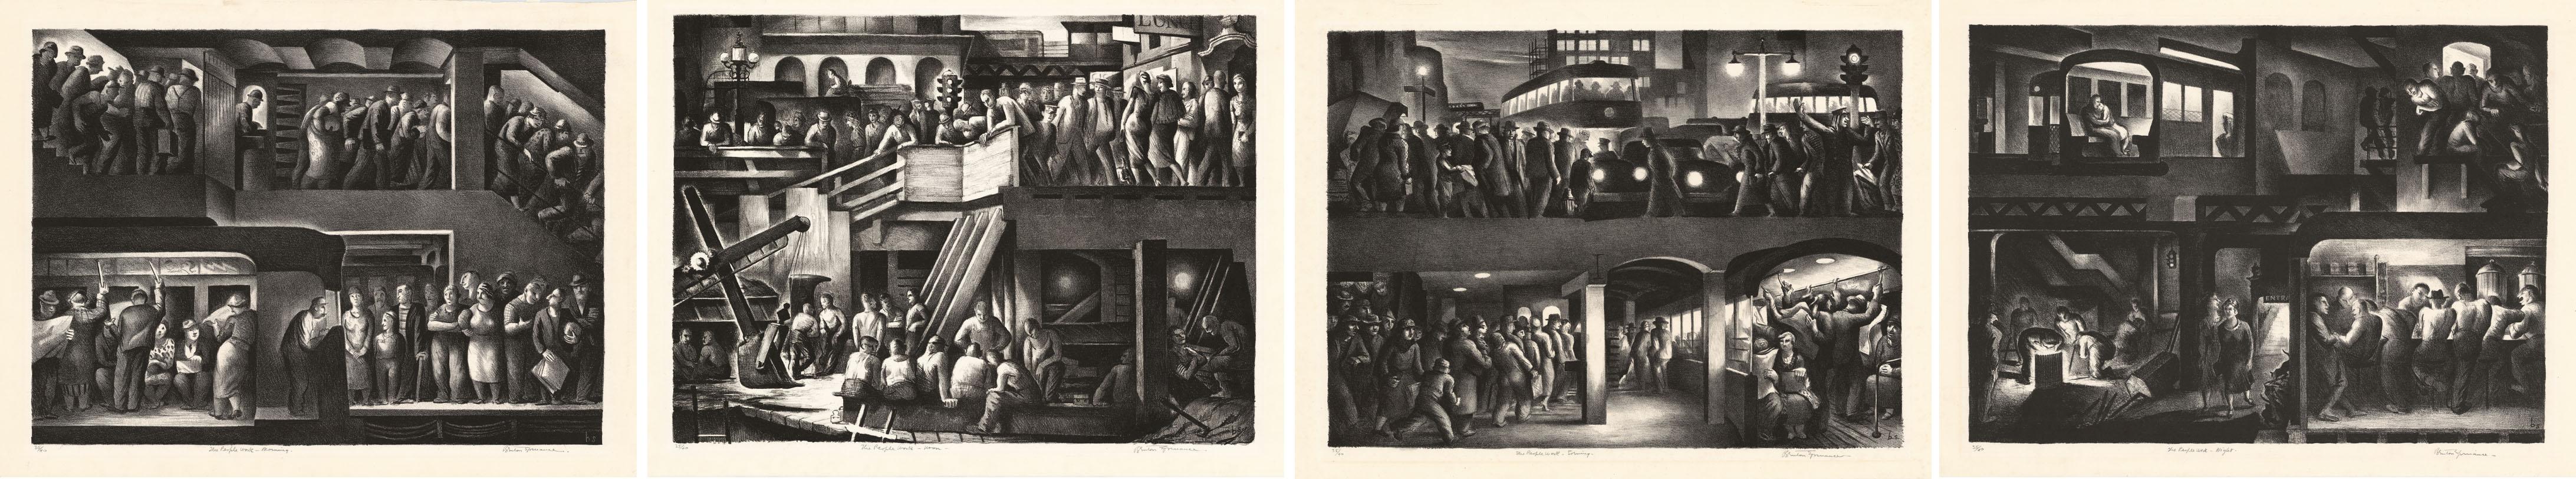 Benton Murdoch Spruance Figurative Print - The People Work, Morning - Noon - Evening - Night. [set of four].